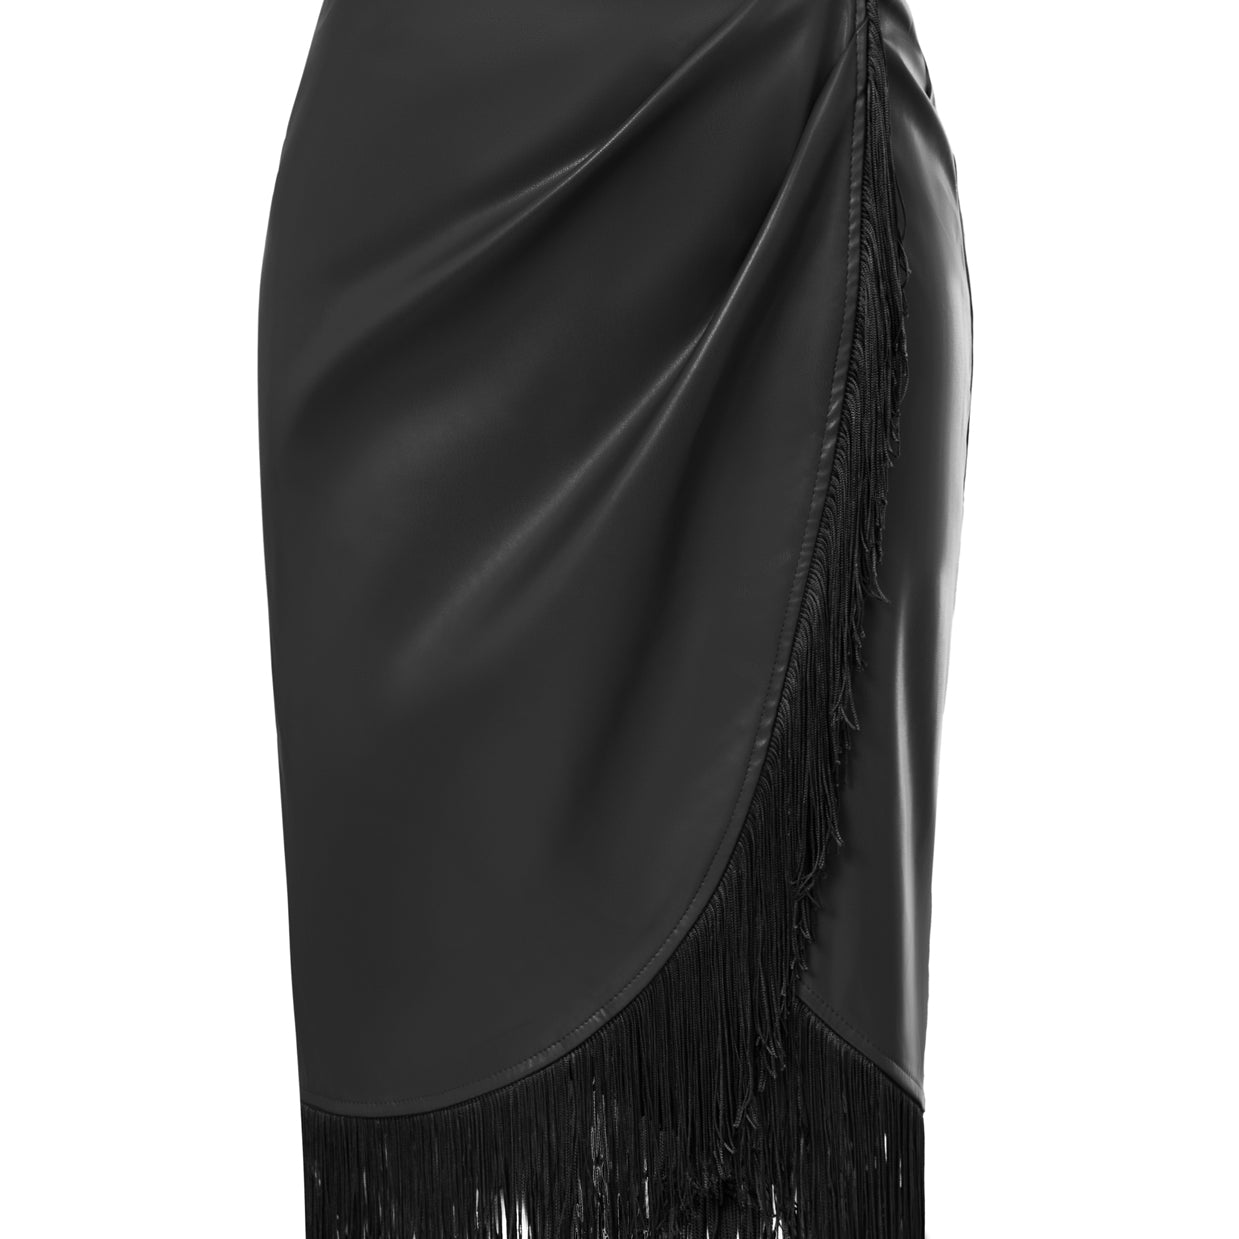 Seckill Offer⌛Fringe Bodycon Leather Skirt with Slit Knee Length Pencil Skirt